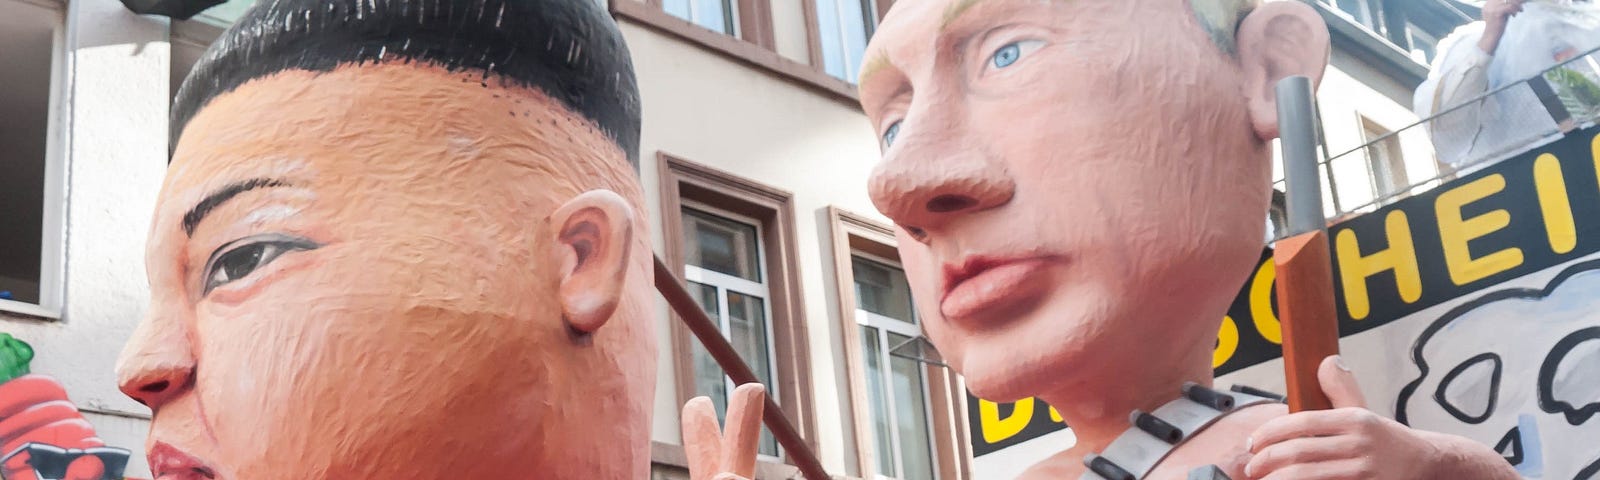 Kim Jong Un and Vladimir Putin Effigies